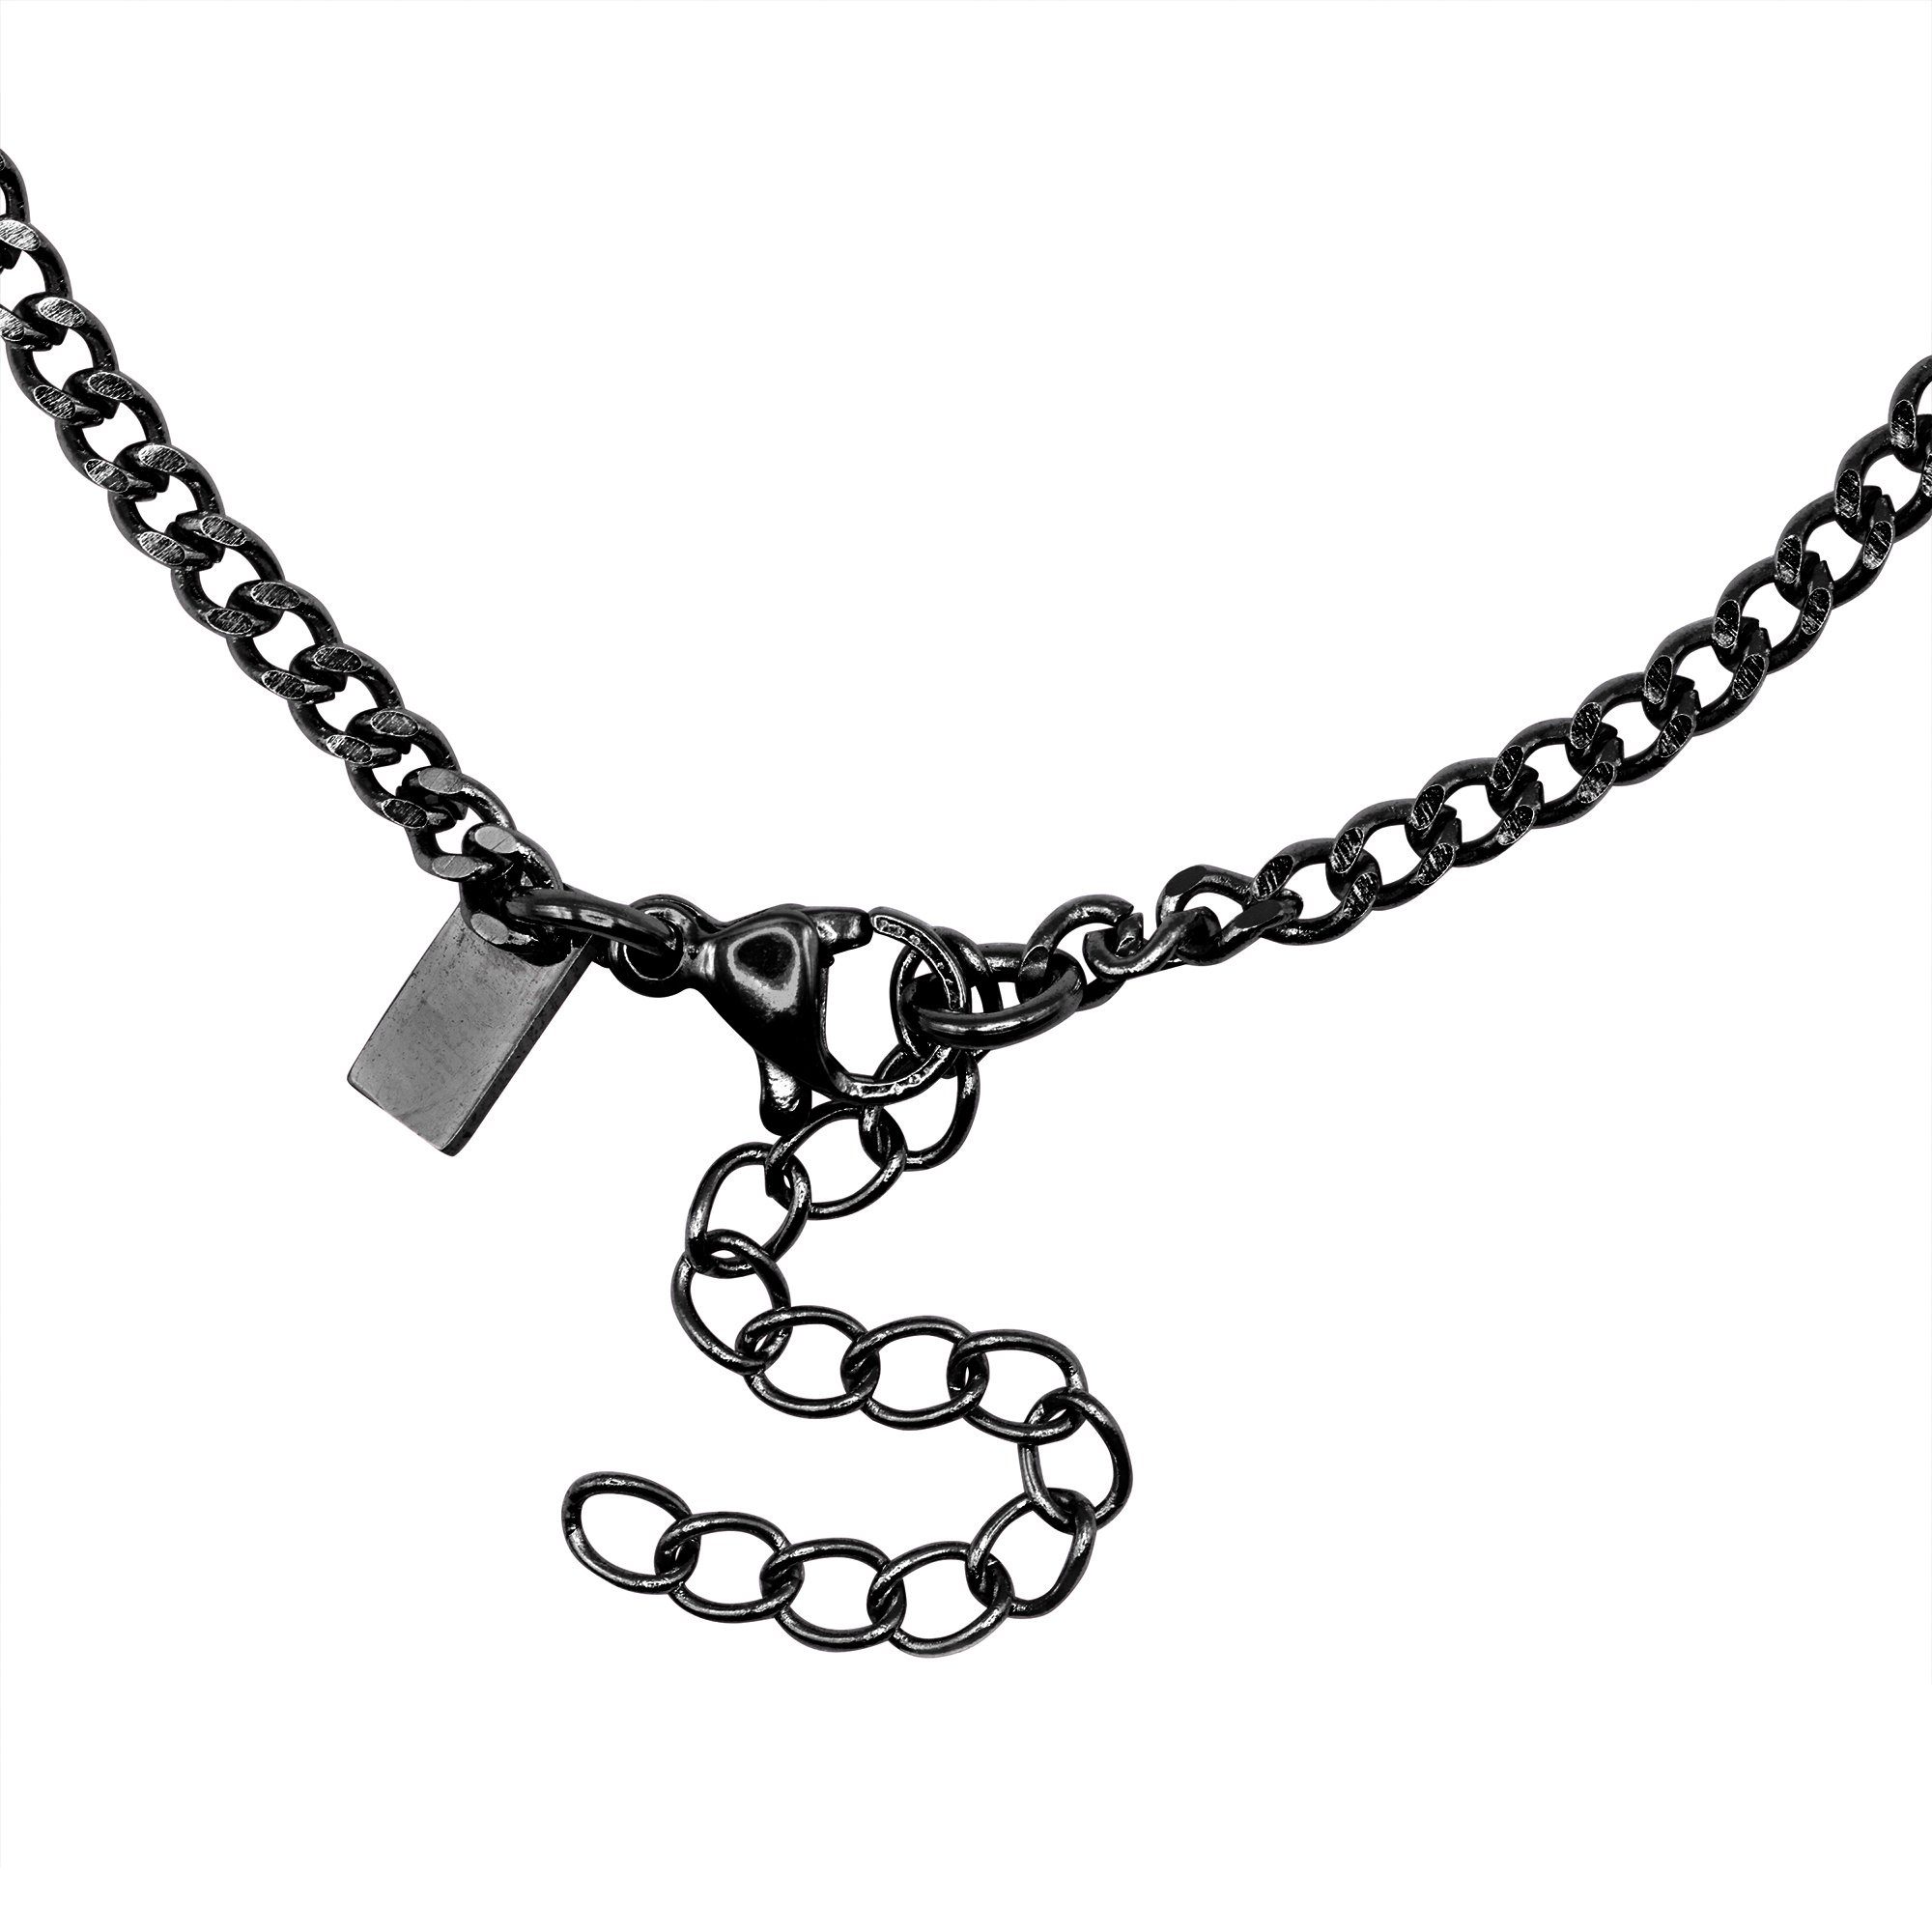 Heideman Männer schwarz farben inkl. Geschenkverpackung), Theo (Armband, Armband Armkette